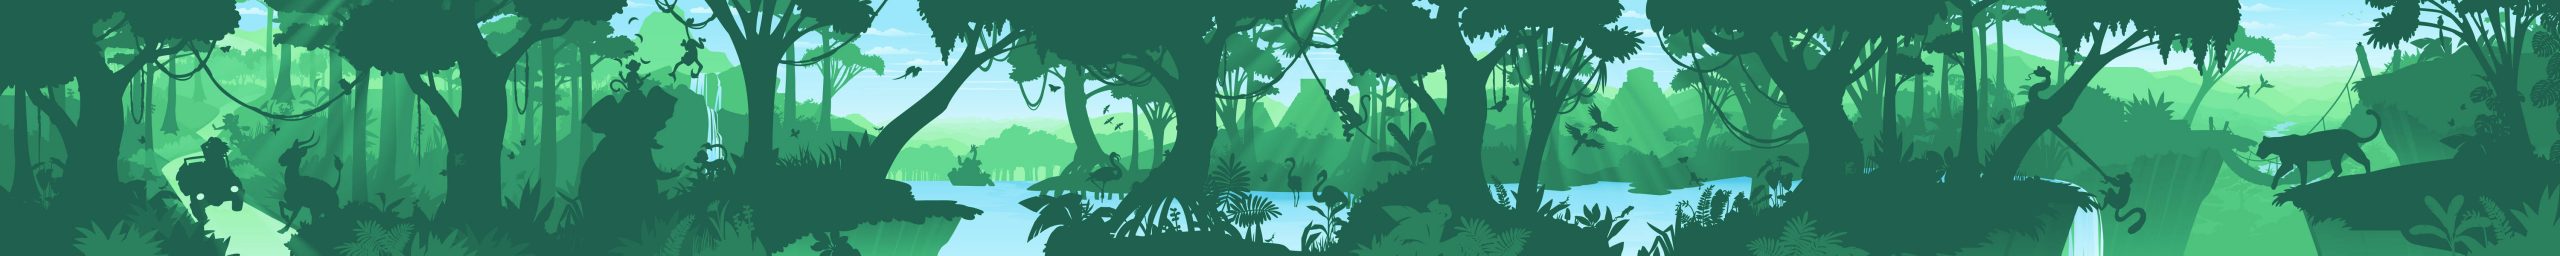 SilhouetteMural-Jungle2